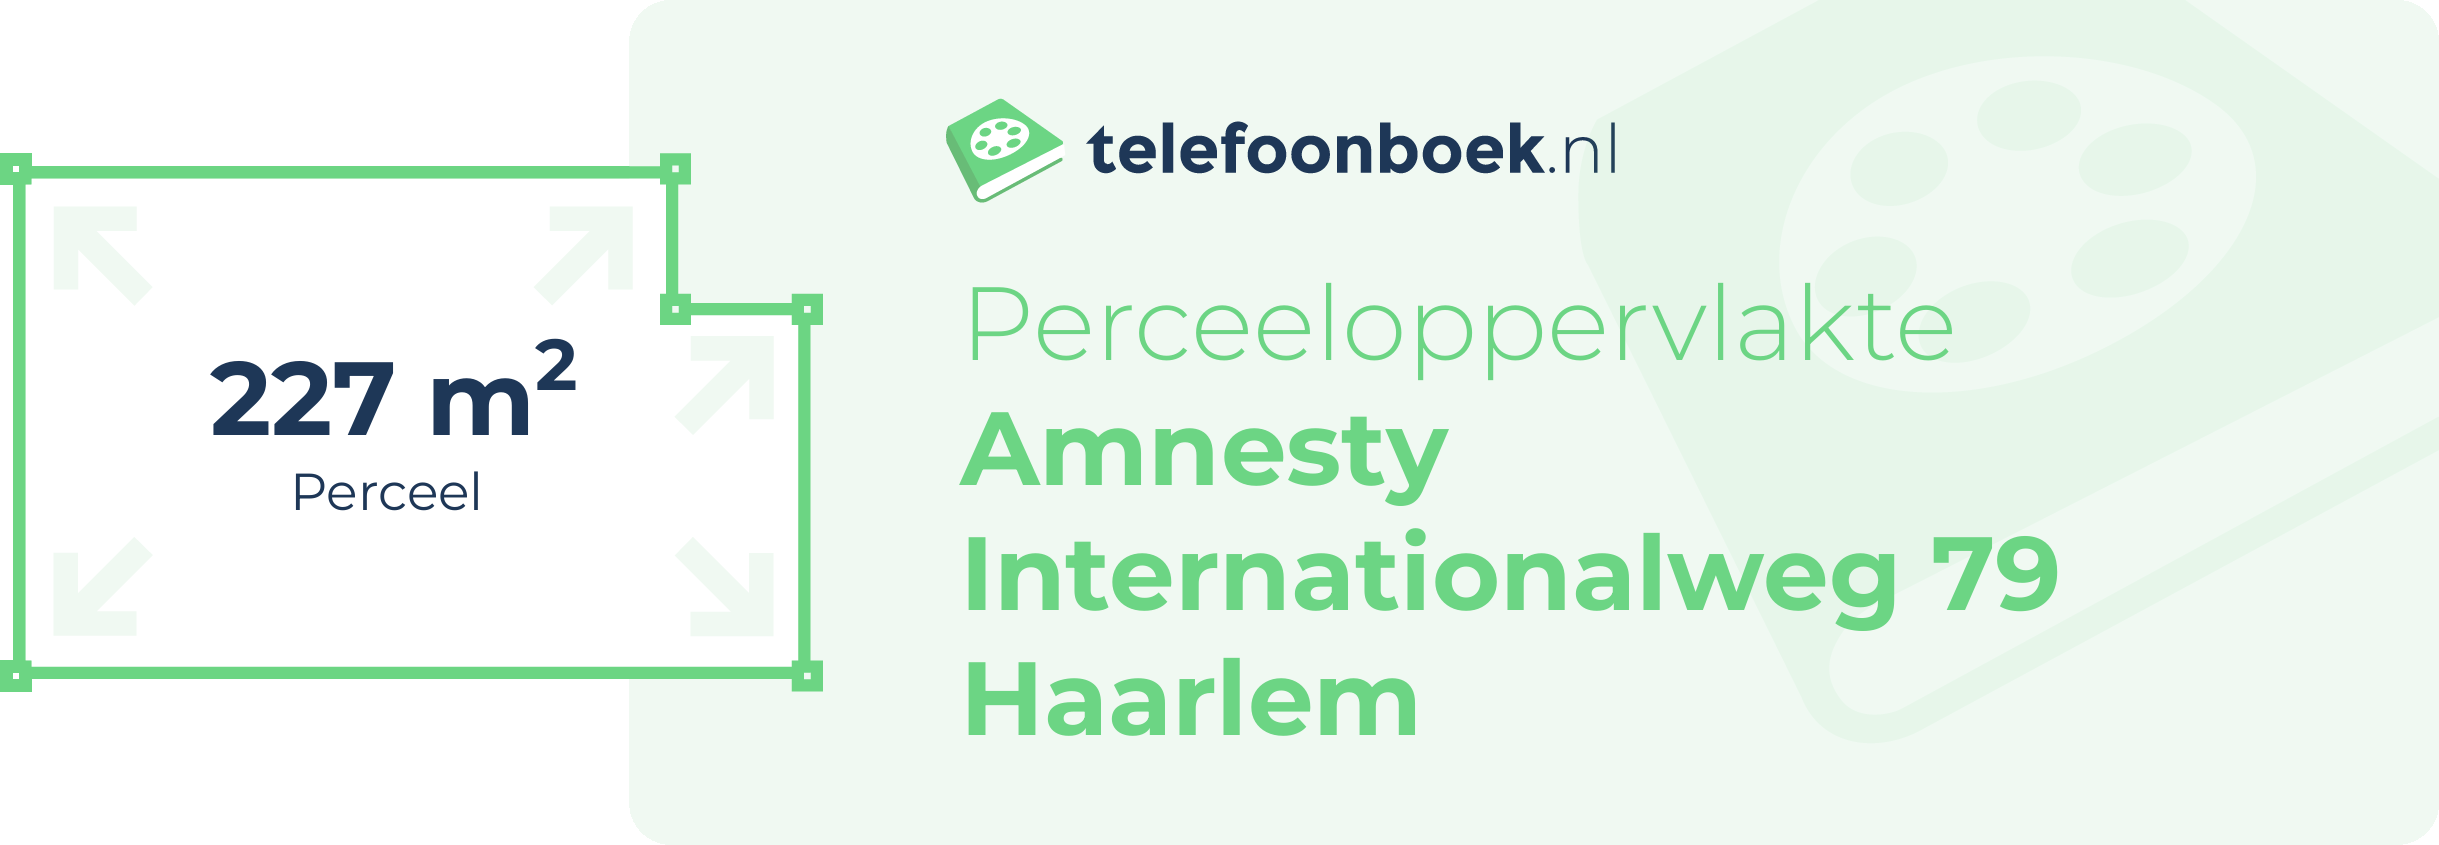 Perceeloppervlakte Amnesty Internationalweg 79 Haarlem